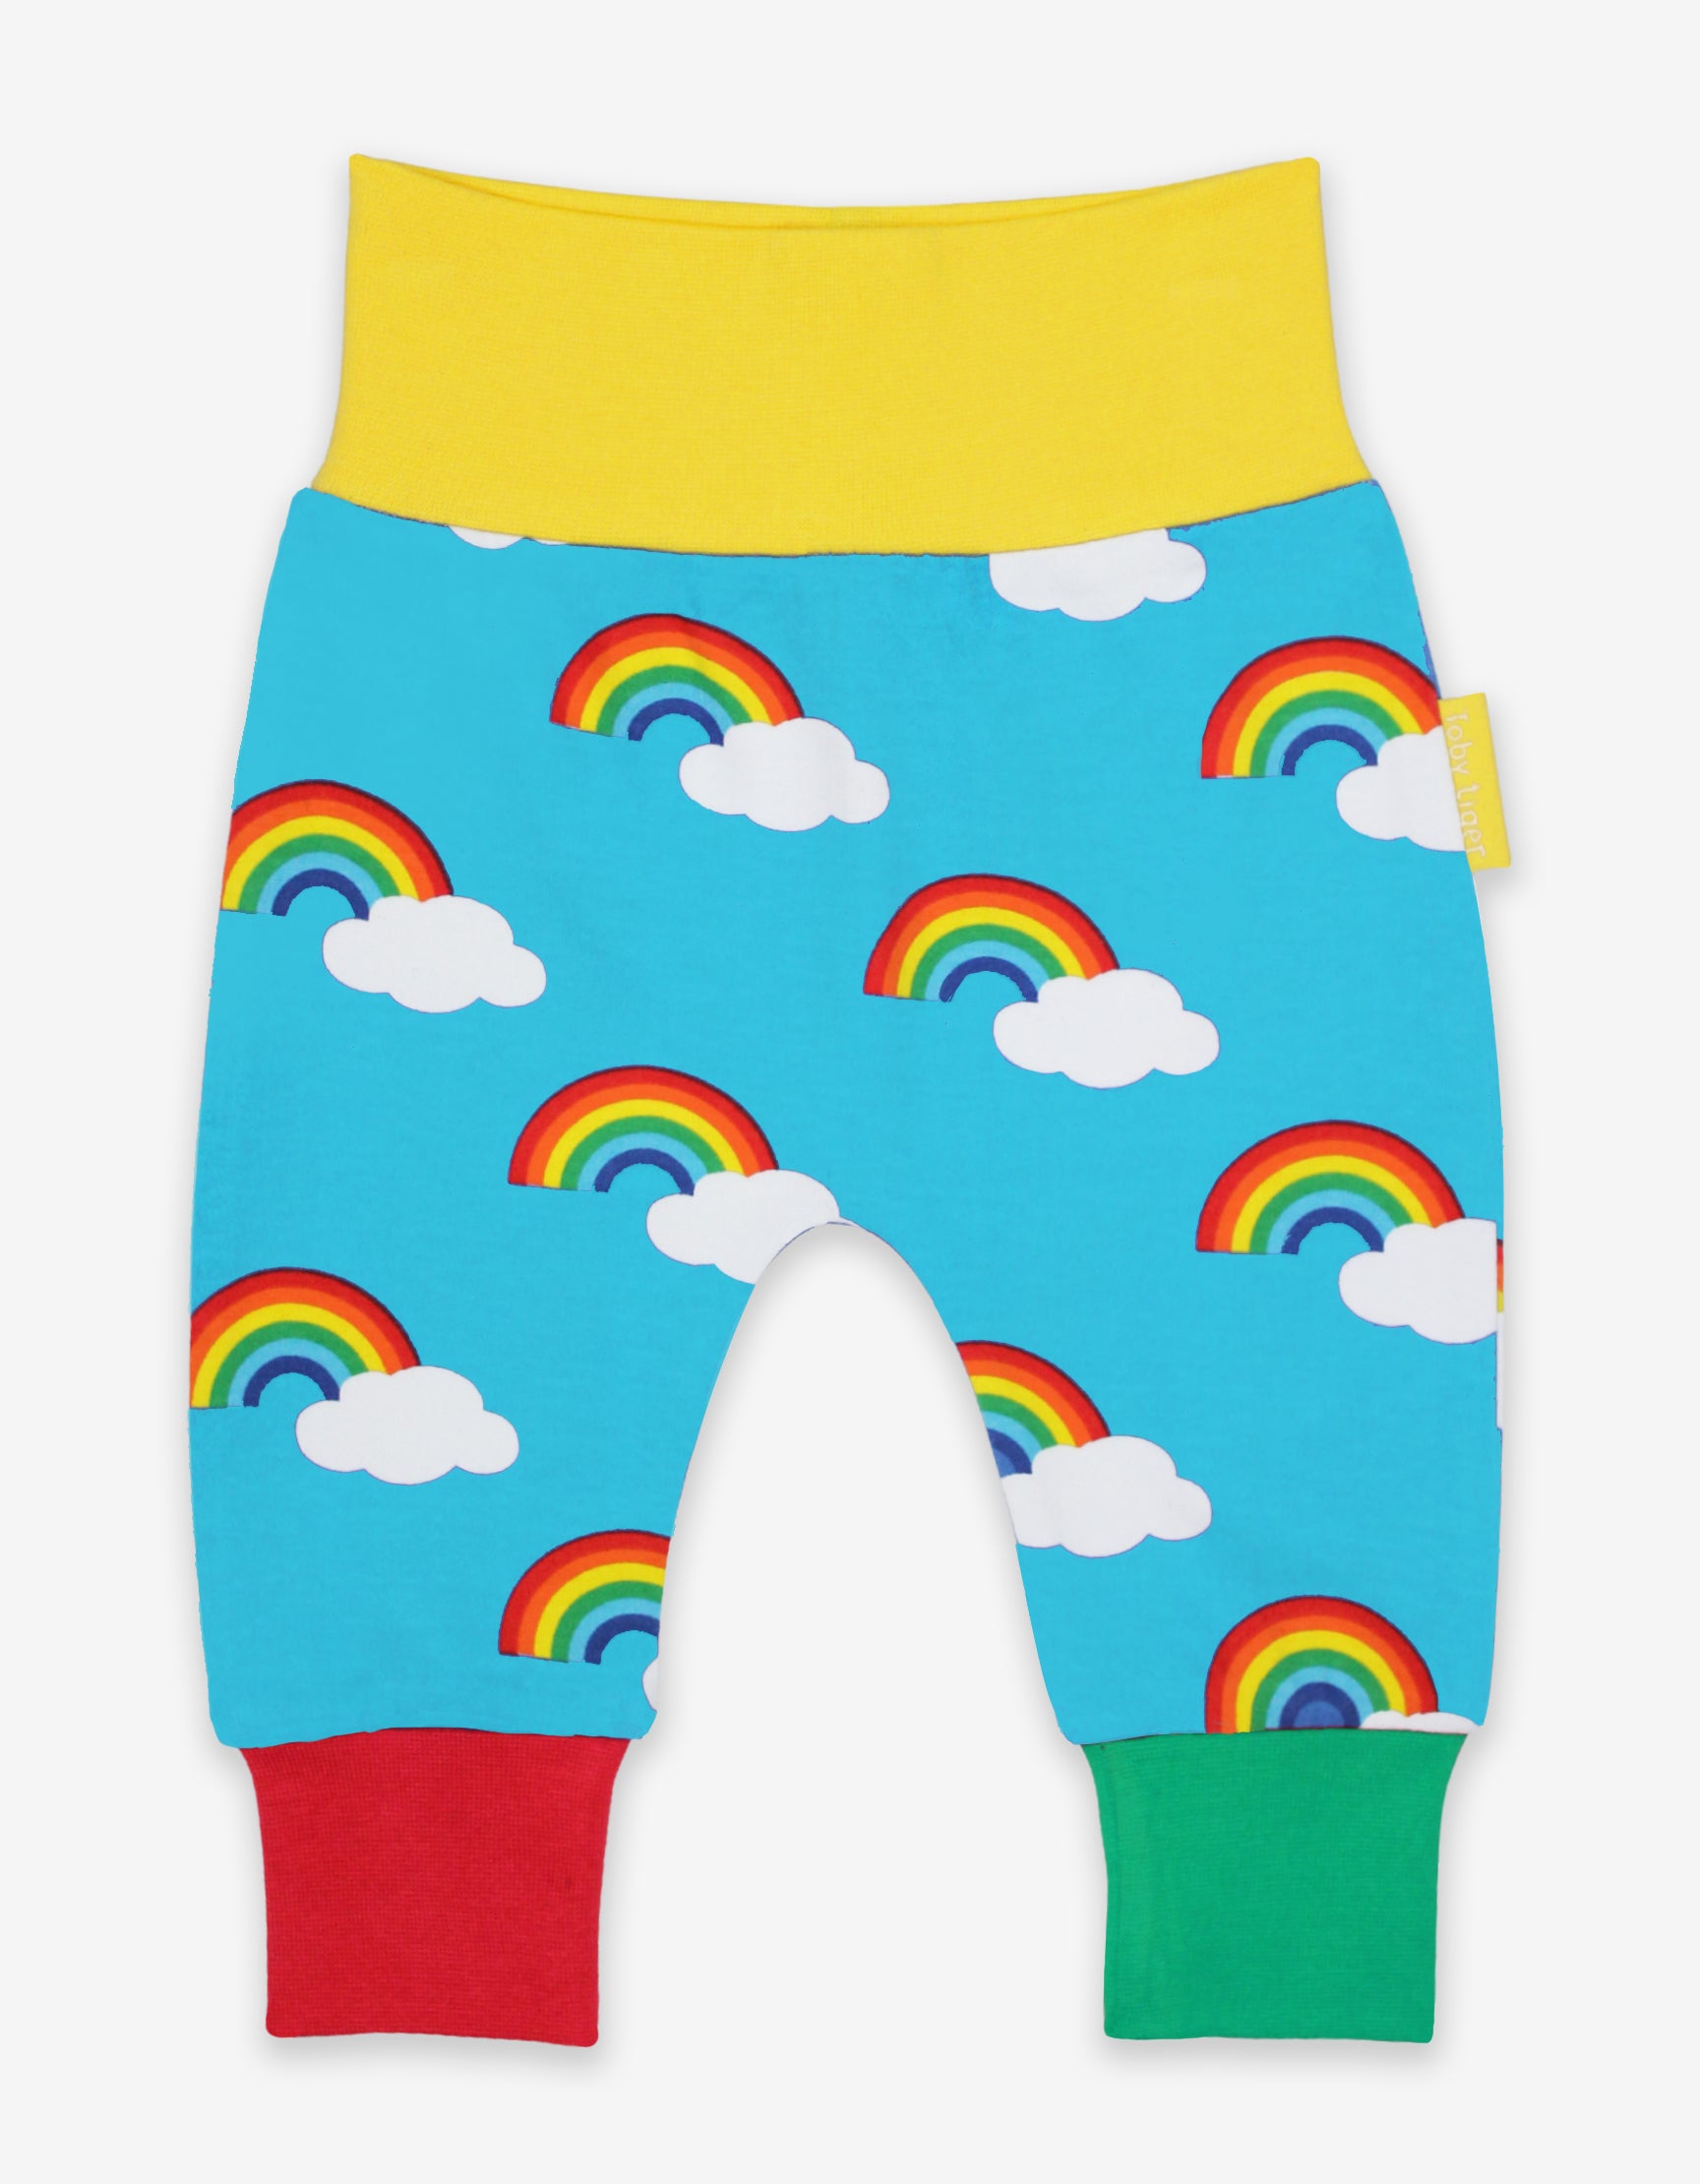 Toby Tiger - Yoga Pants - Turquoise Rainbow